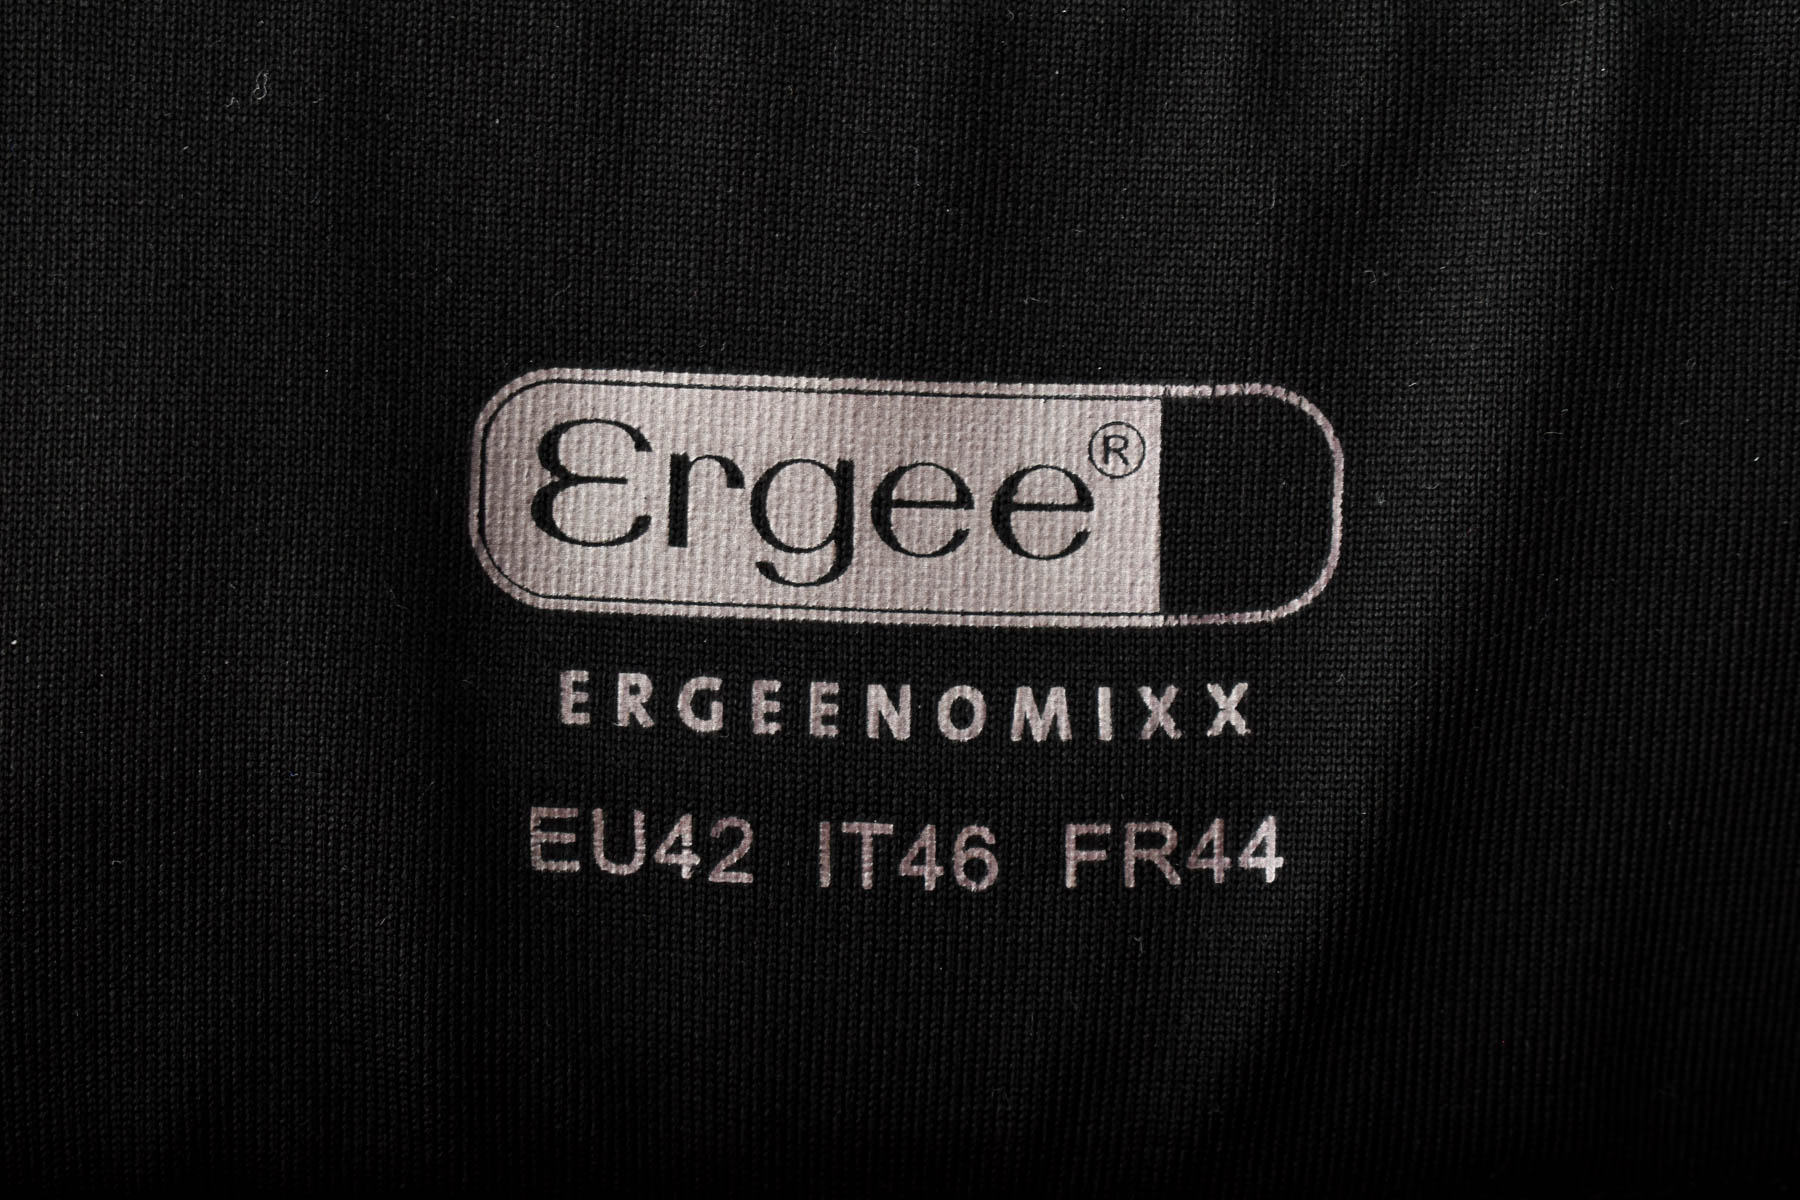 Leggings - Ergee - 2